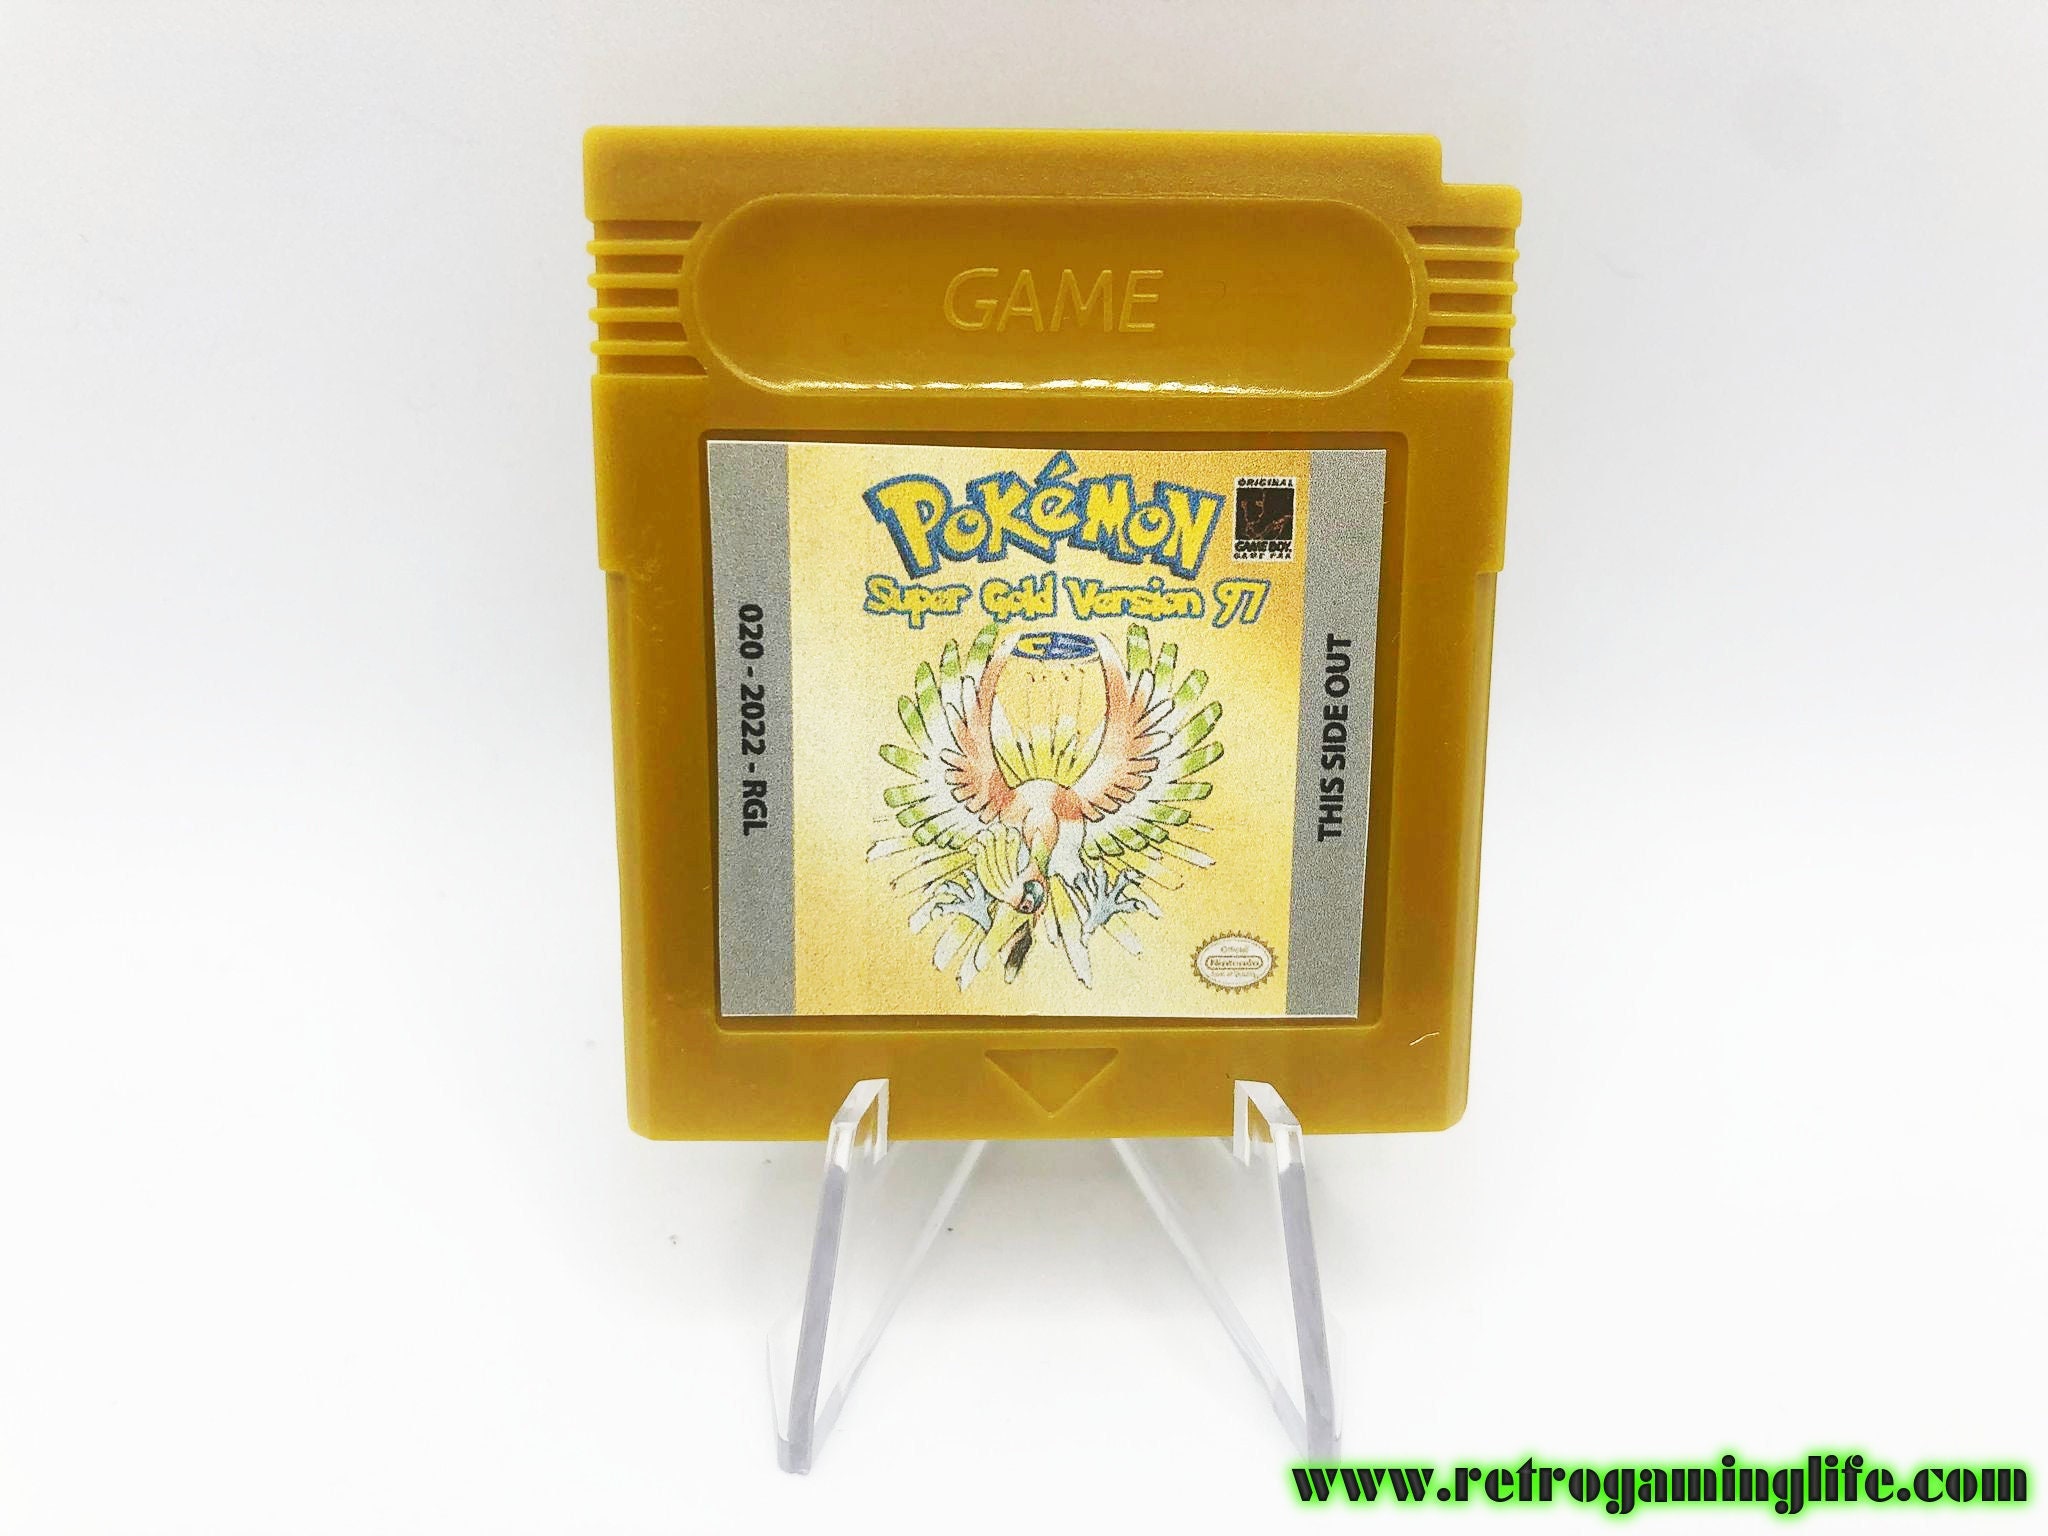 GBA Roms - Name:Pokemon Thunder Yellow Version:Beta V2